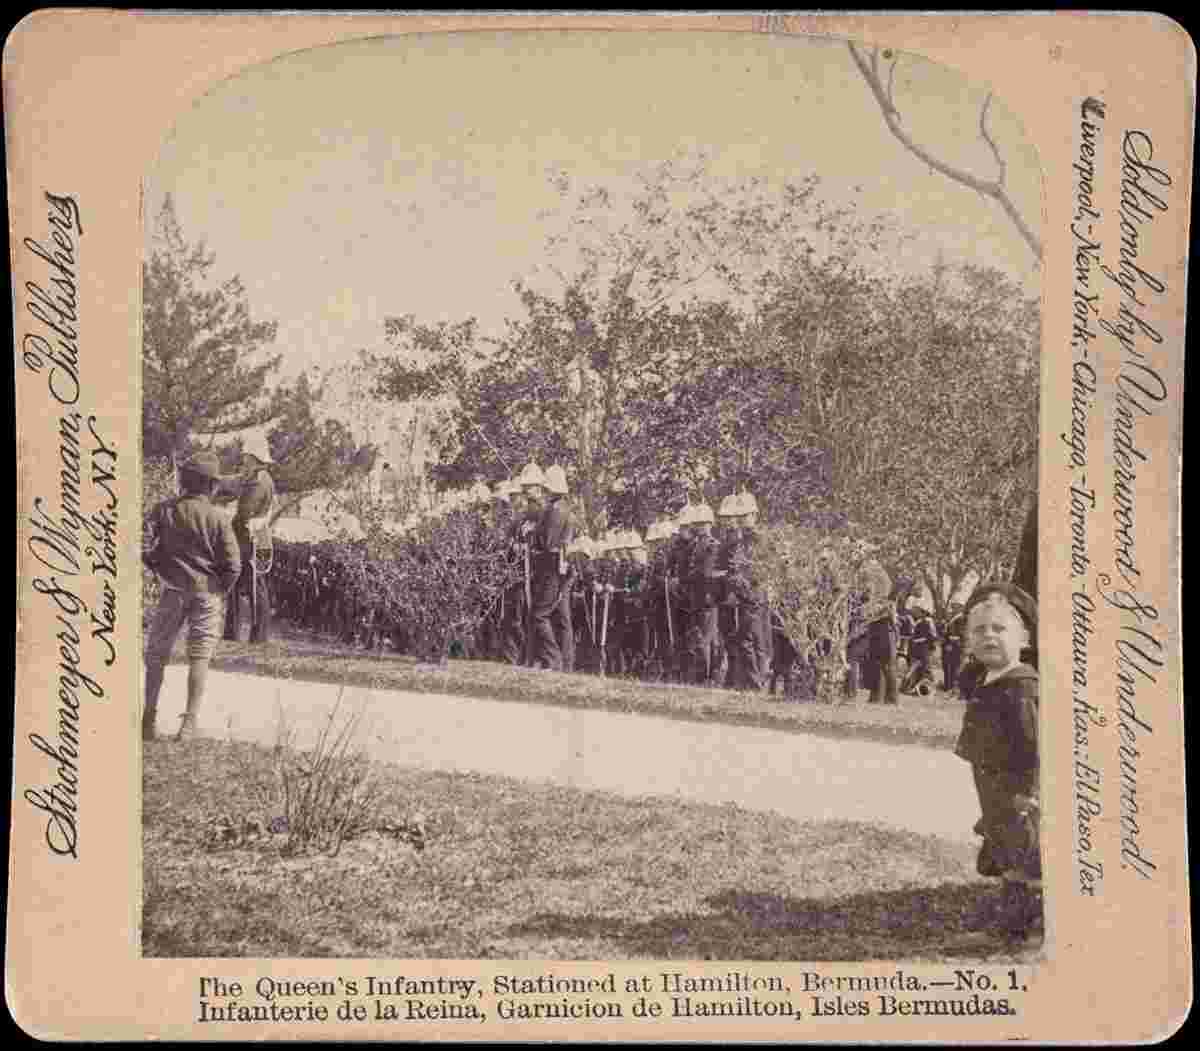 Hamilton. Queen's infantry, stationed at Hamilton, circa 1890